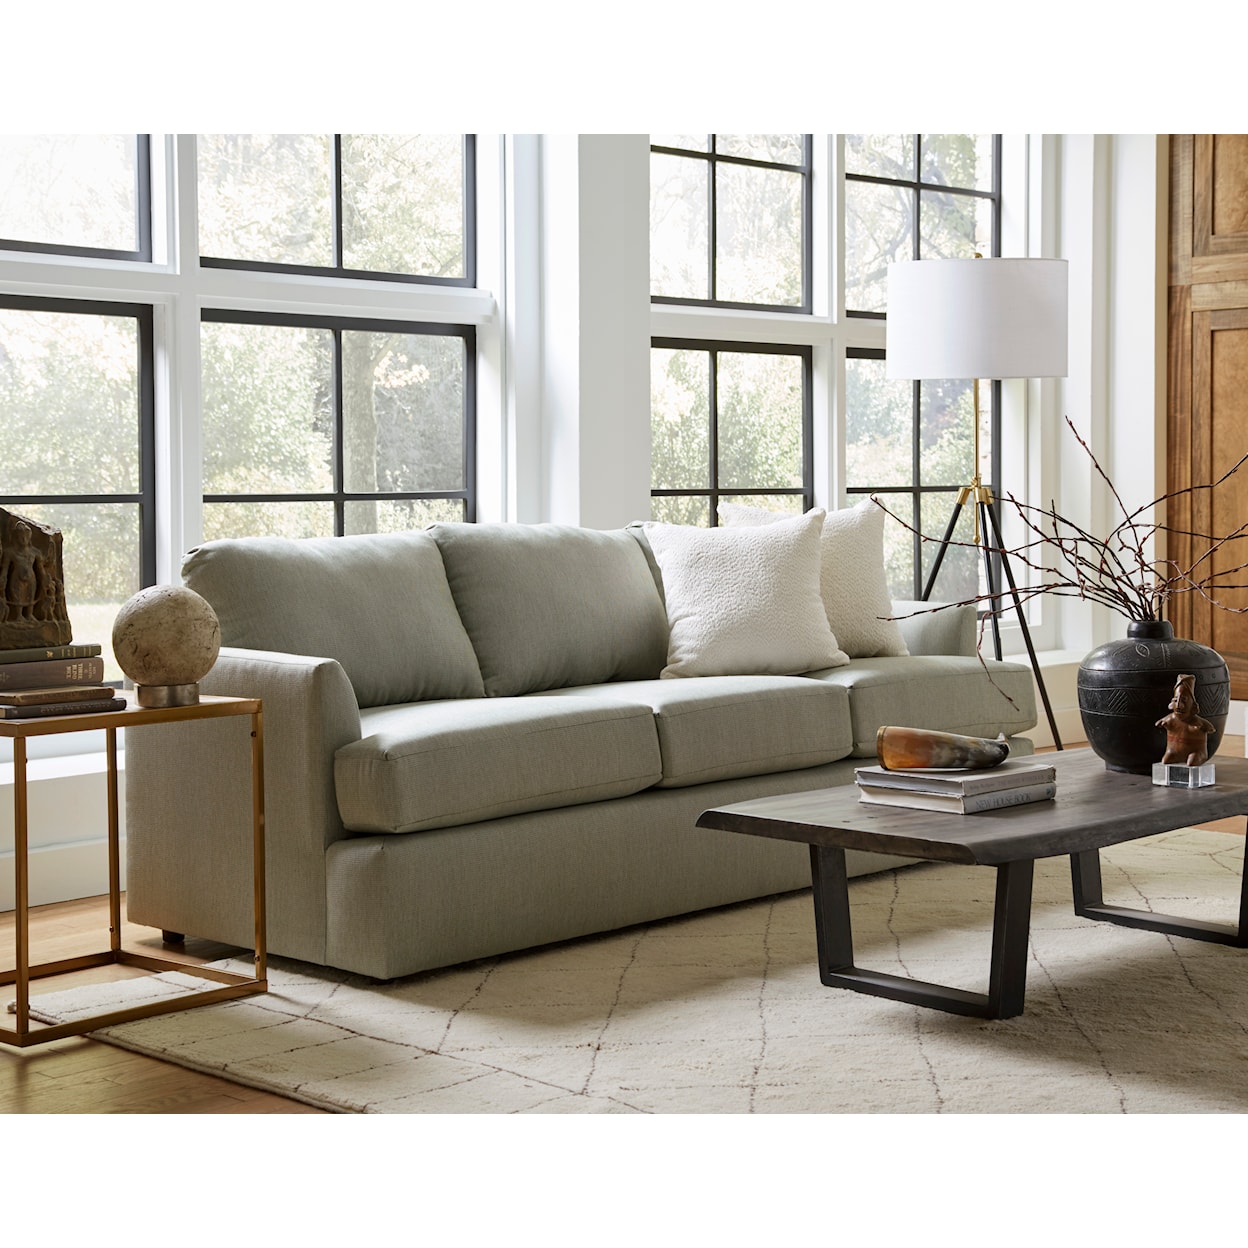 Best Home Furnishings Malanda Sofa